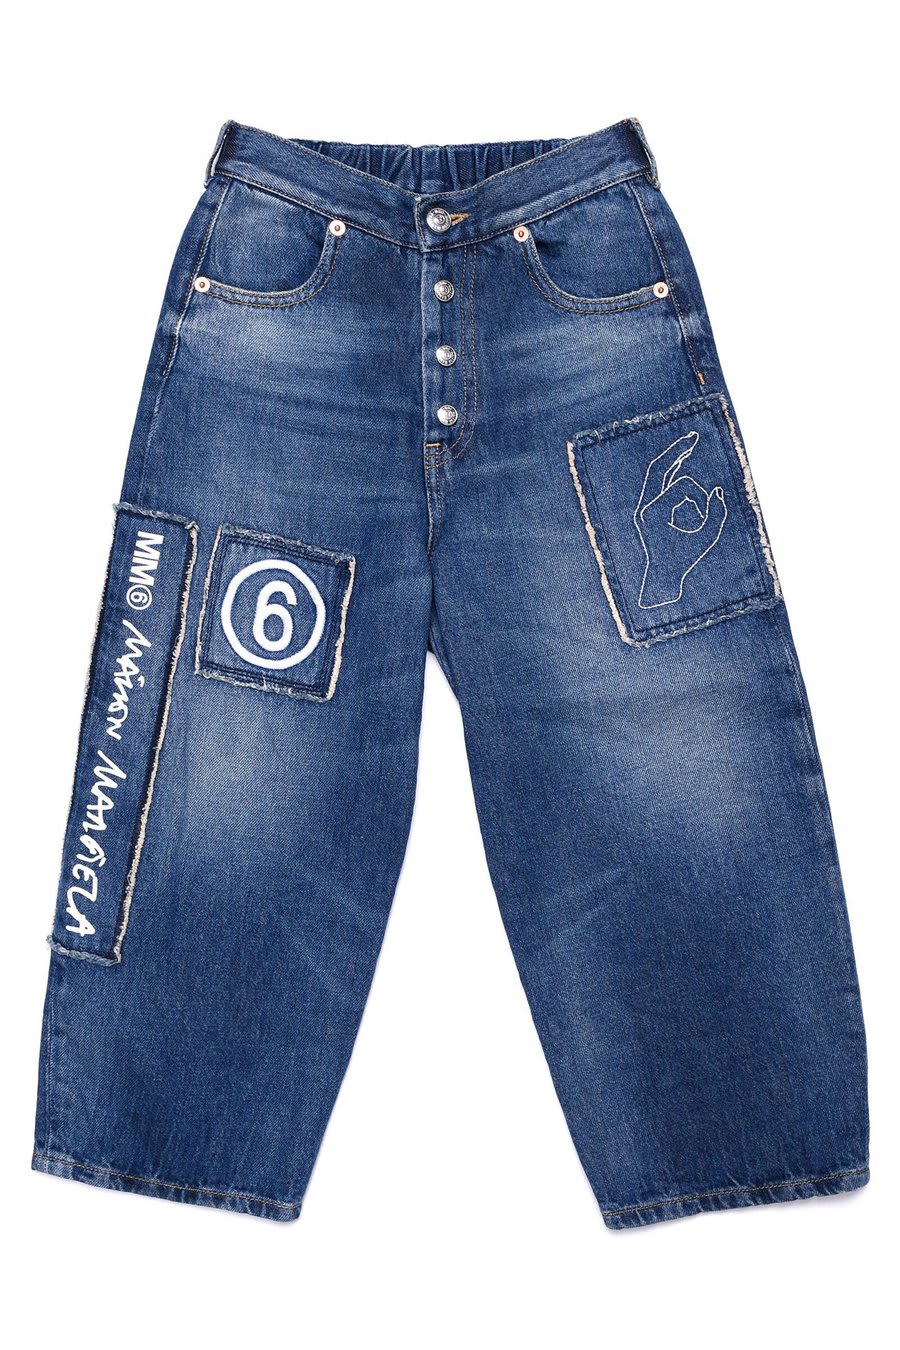 MM6 Maison Margiela Jeans With Print